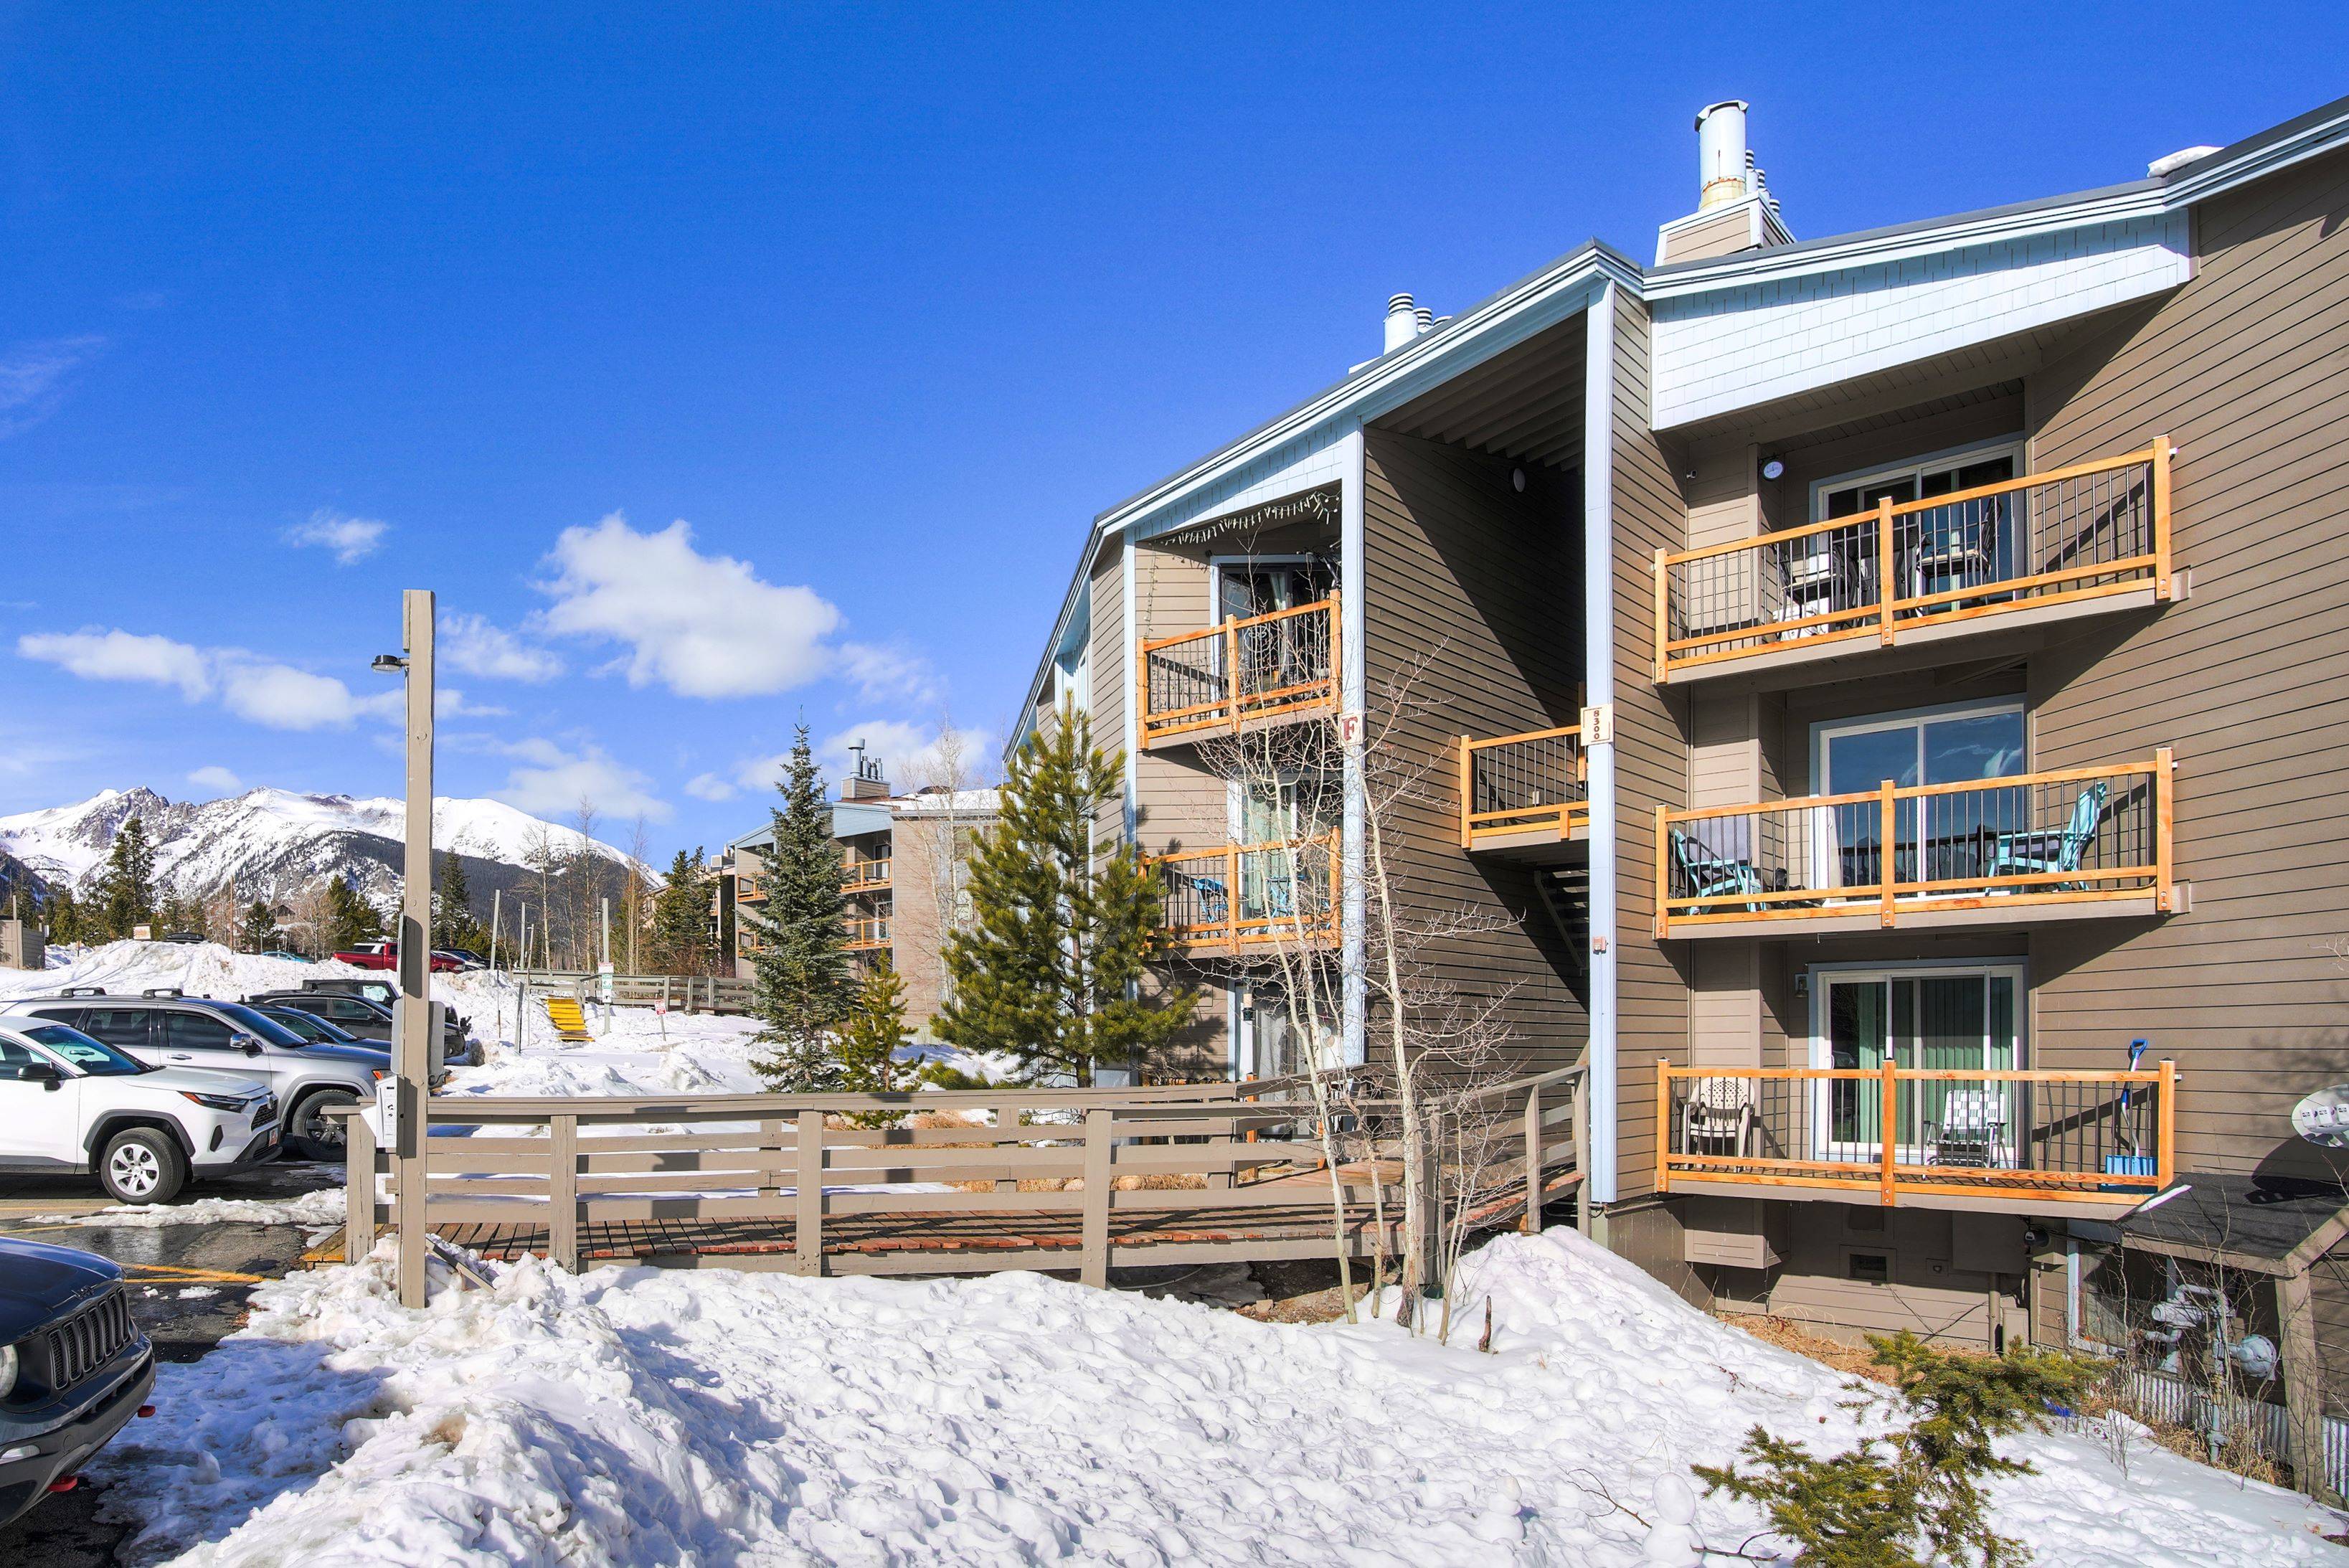 Mountain Condo for Sale - Close to 6 World Class Ski Resorts